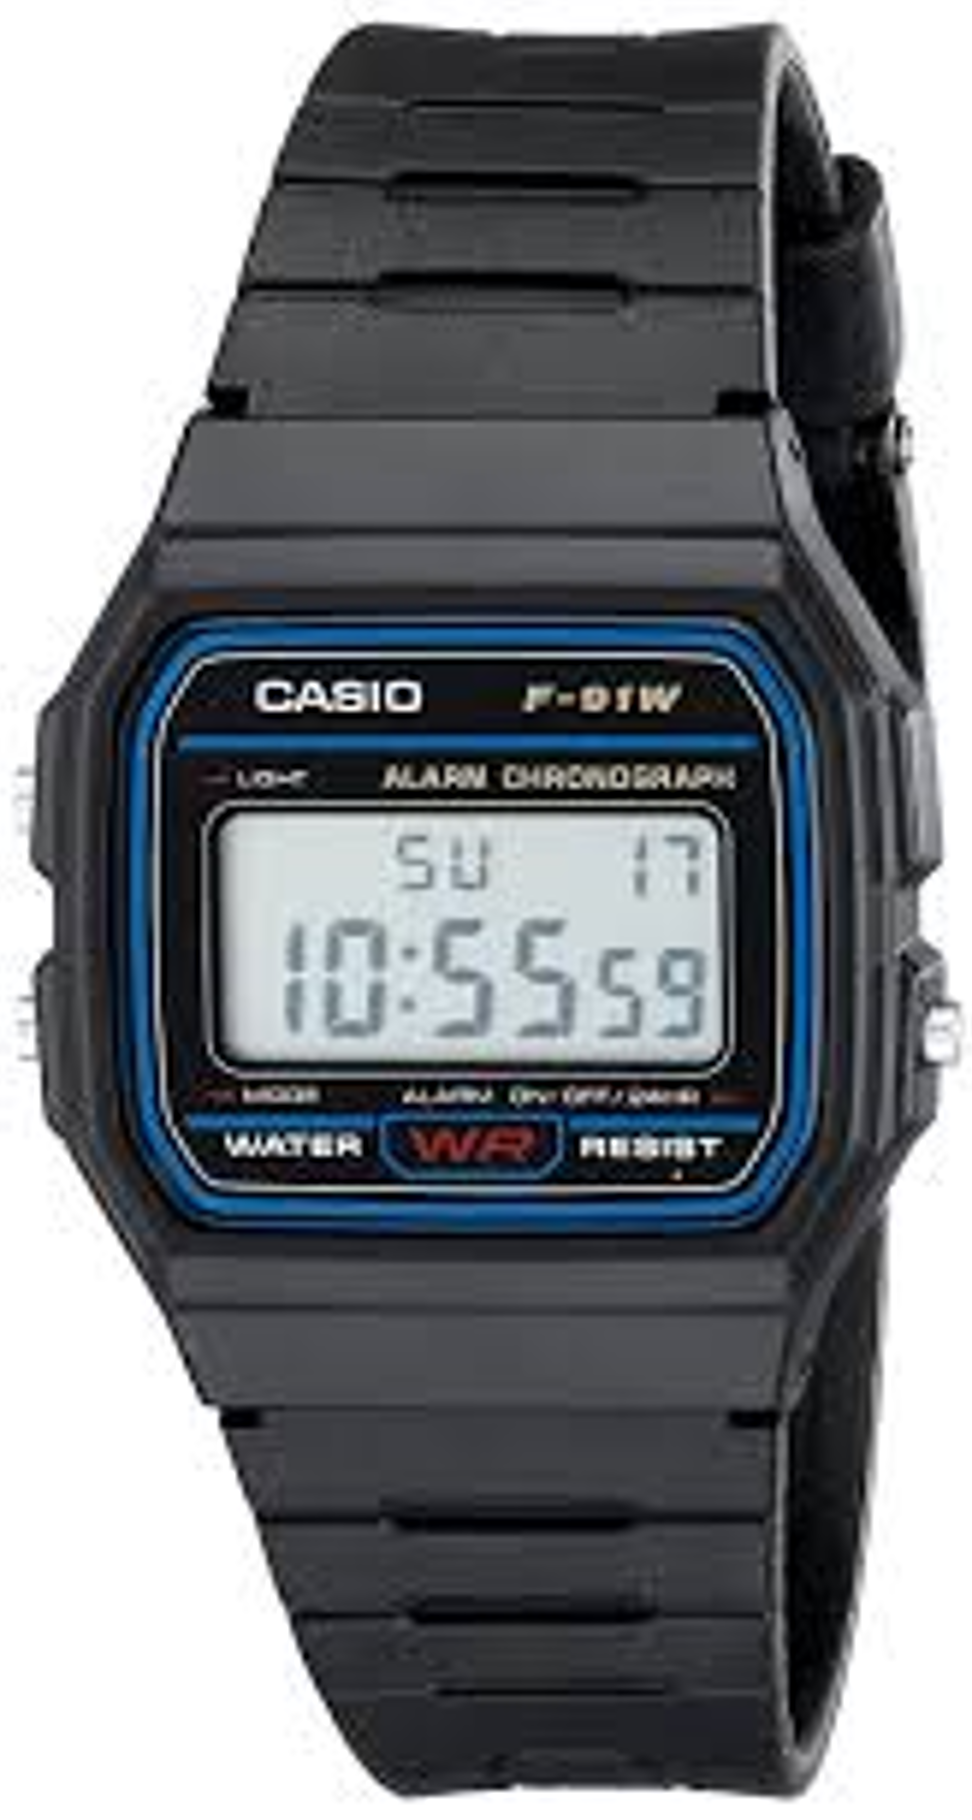 The Casio F-91W watch.